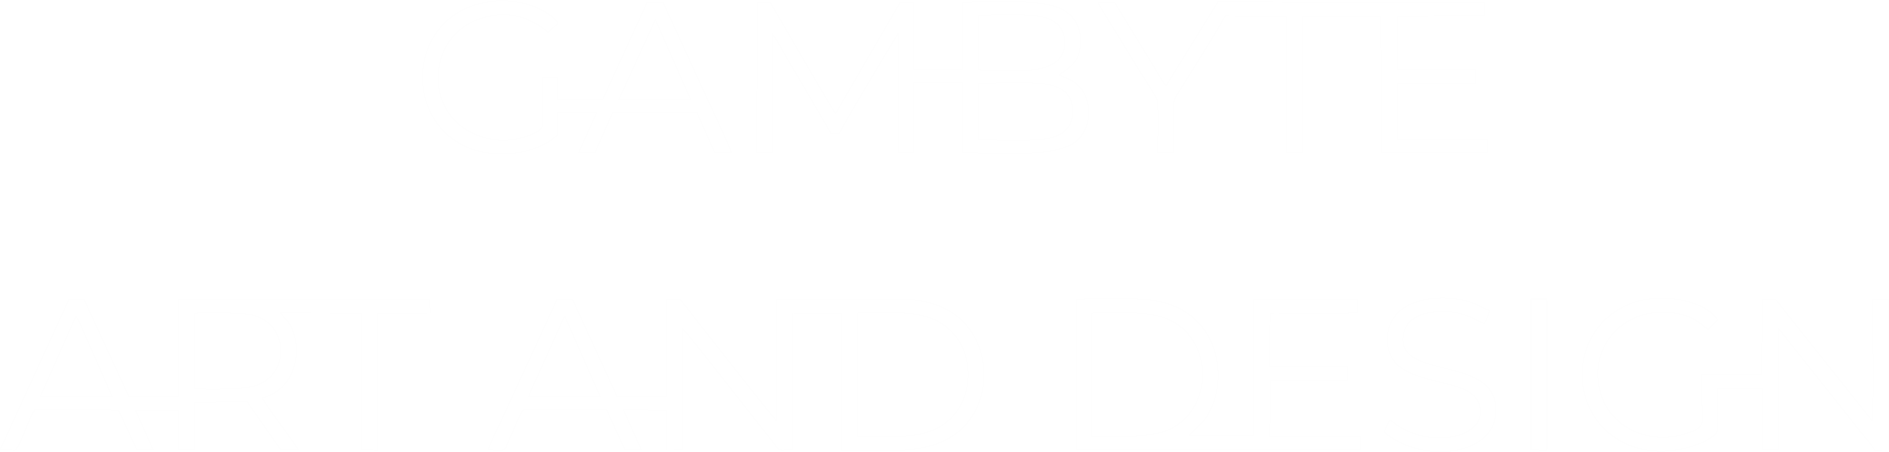 Gambyte Art & Design Logo